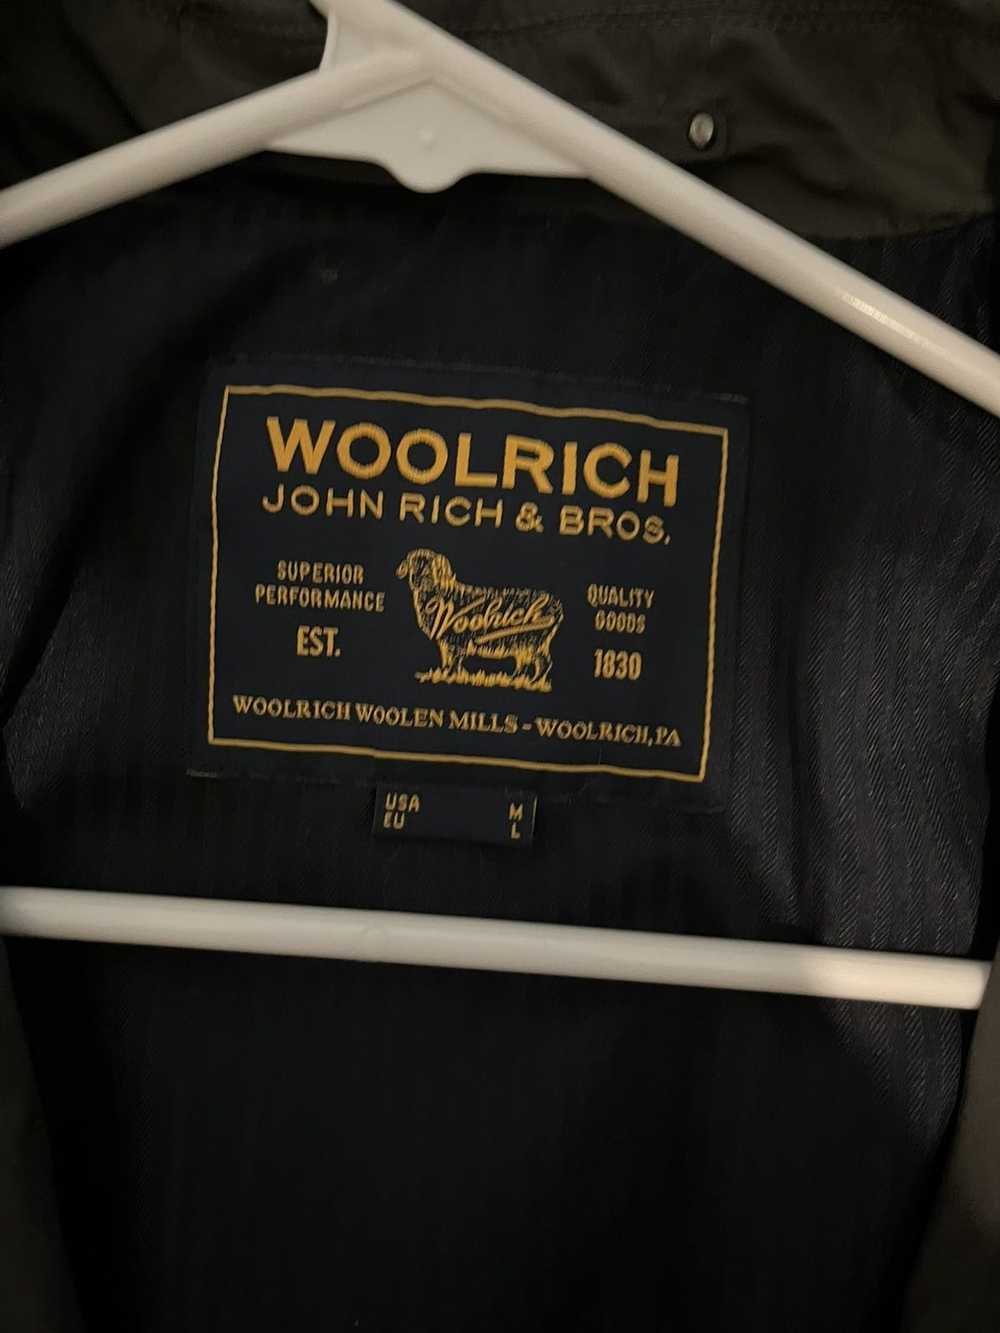 Woolrich John Rich & Bros. Light Jacket - image 3